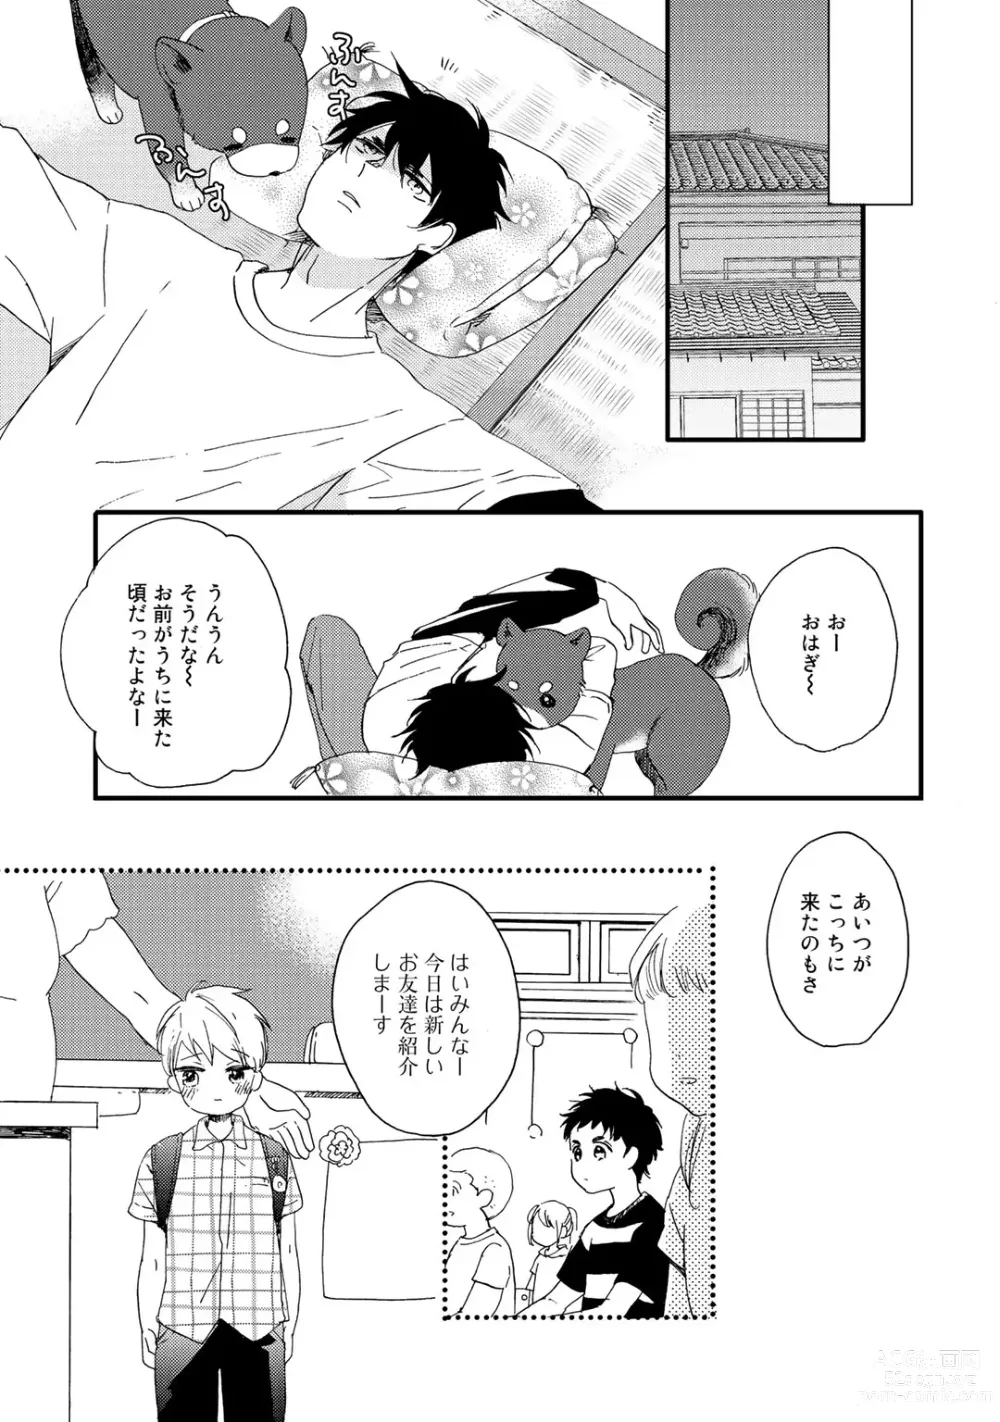 Page 33 of manga Hatsukoi Escape